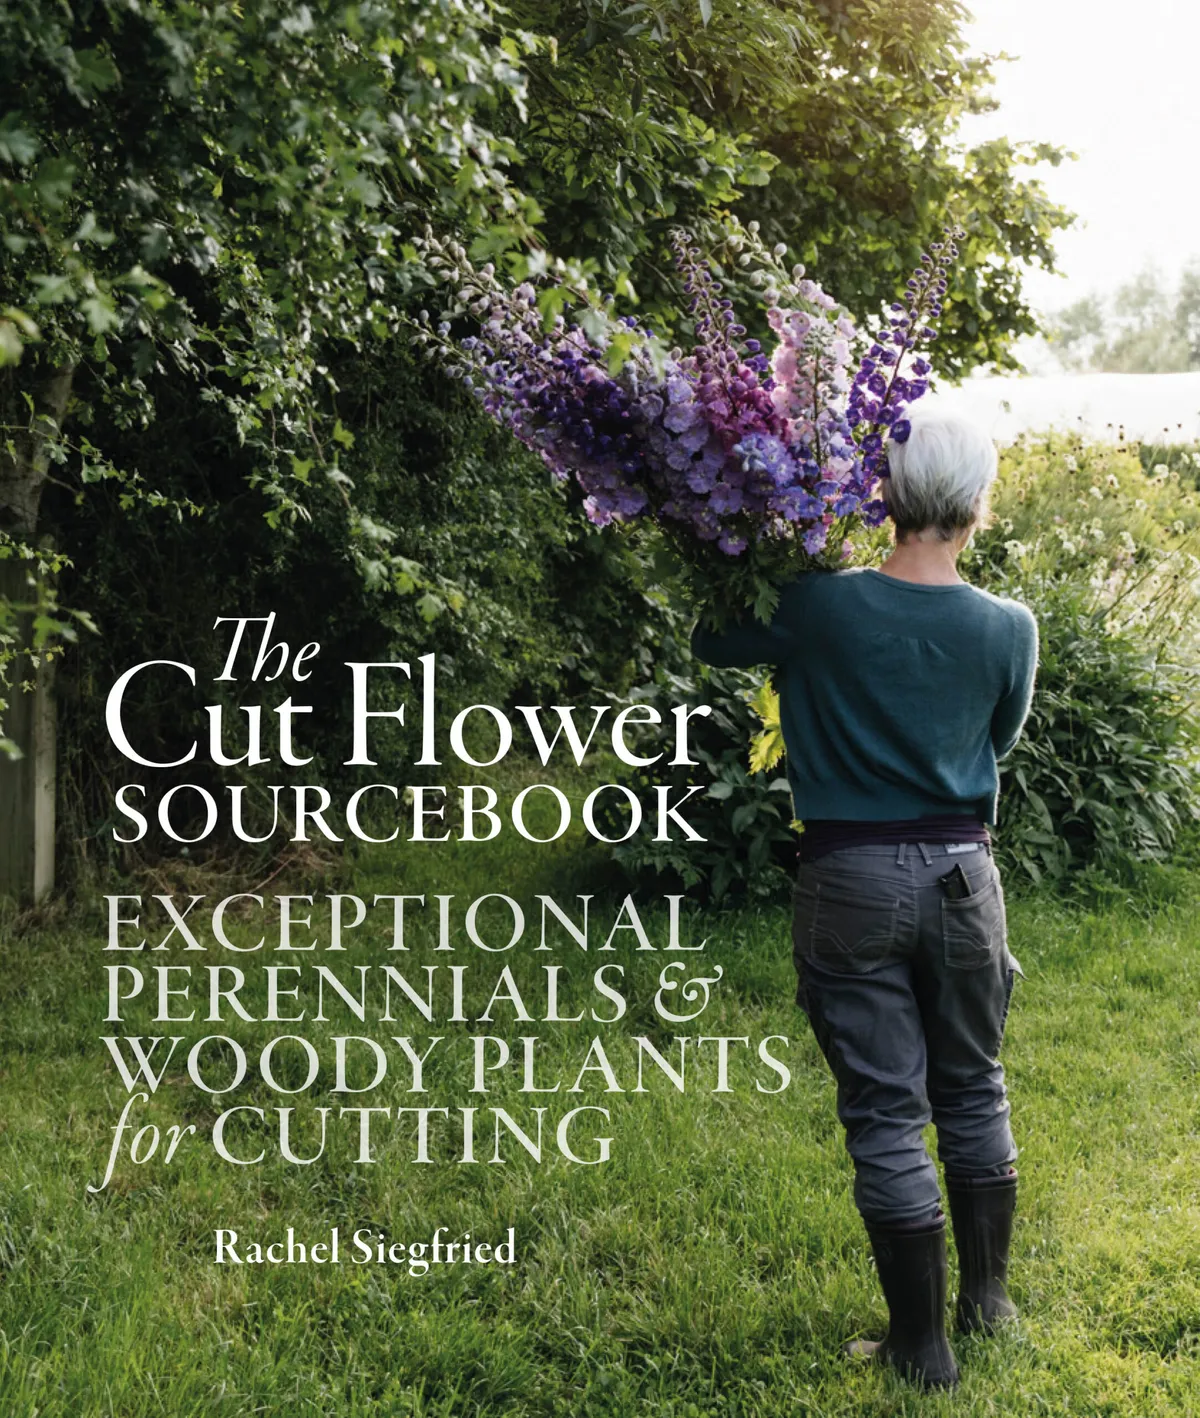 The Cut Flower Sourcebook by Rachel Siegfried